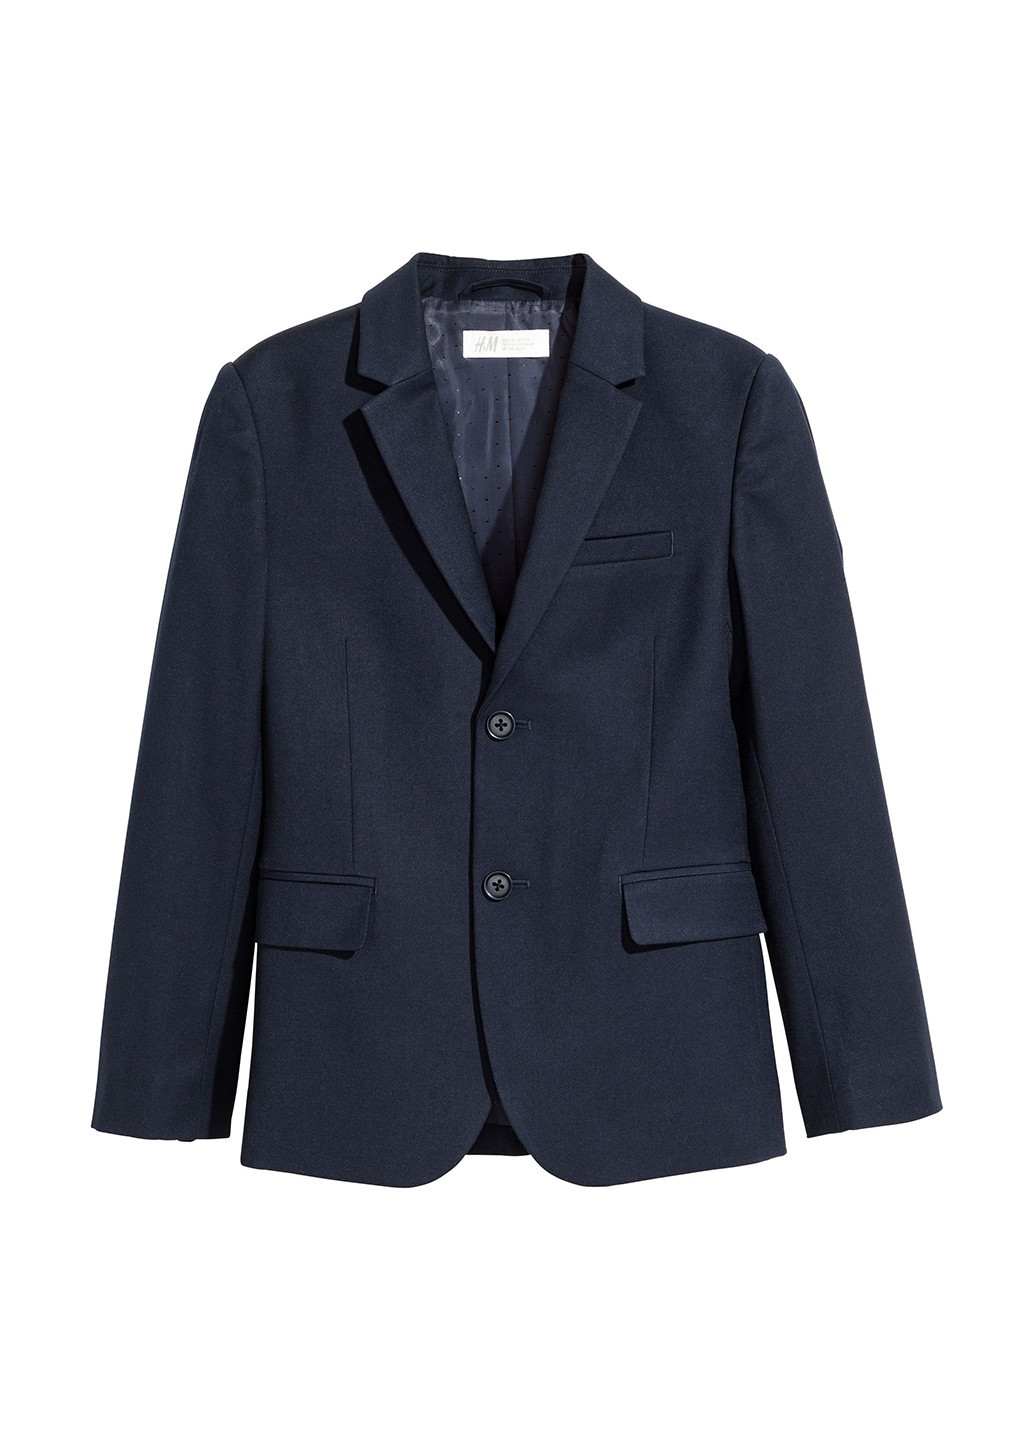 Пиджак H&M меланж тёмно-синий деловой полиэстер